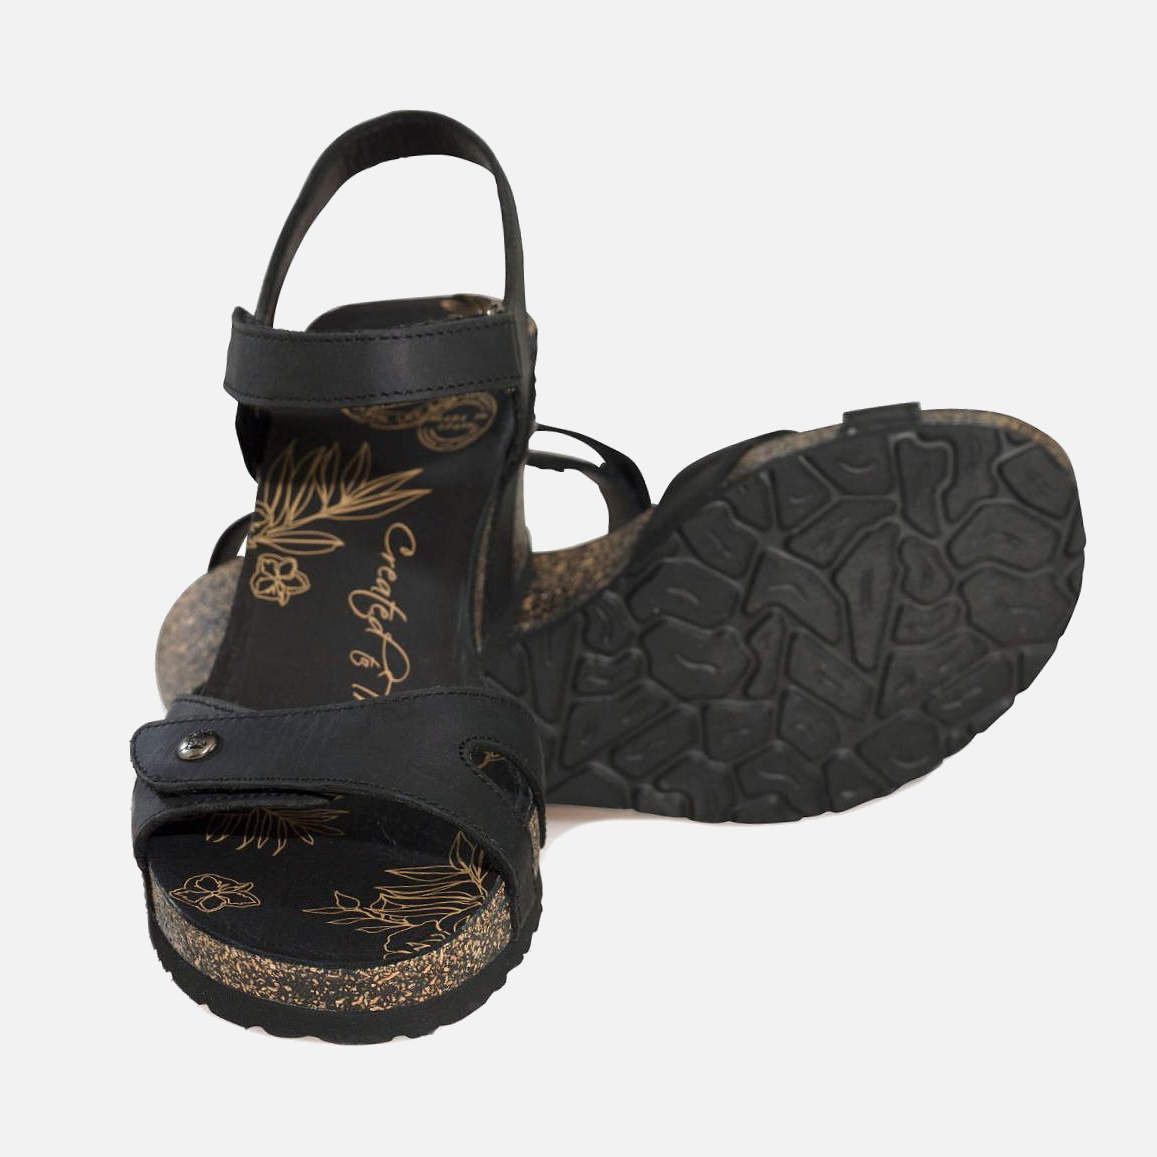 Panama Jack Julia B1 Wedge Sandals in Black Leather